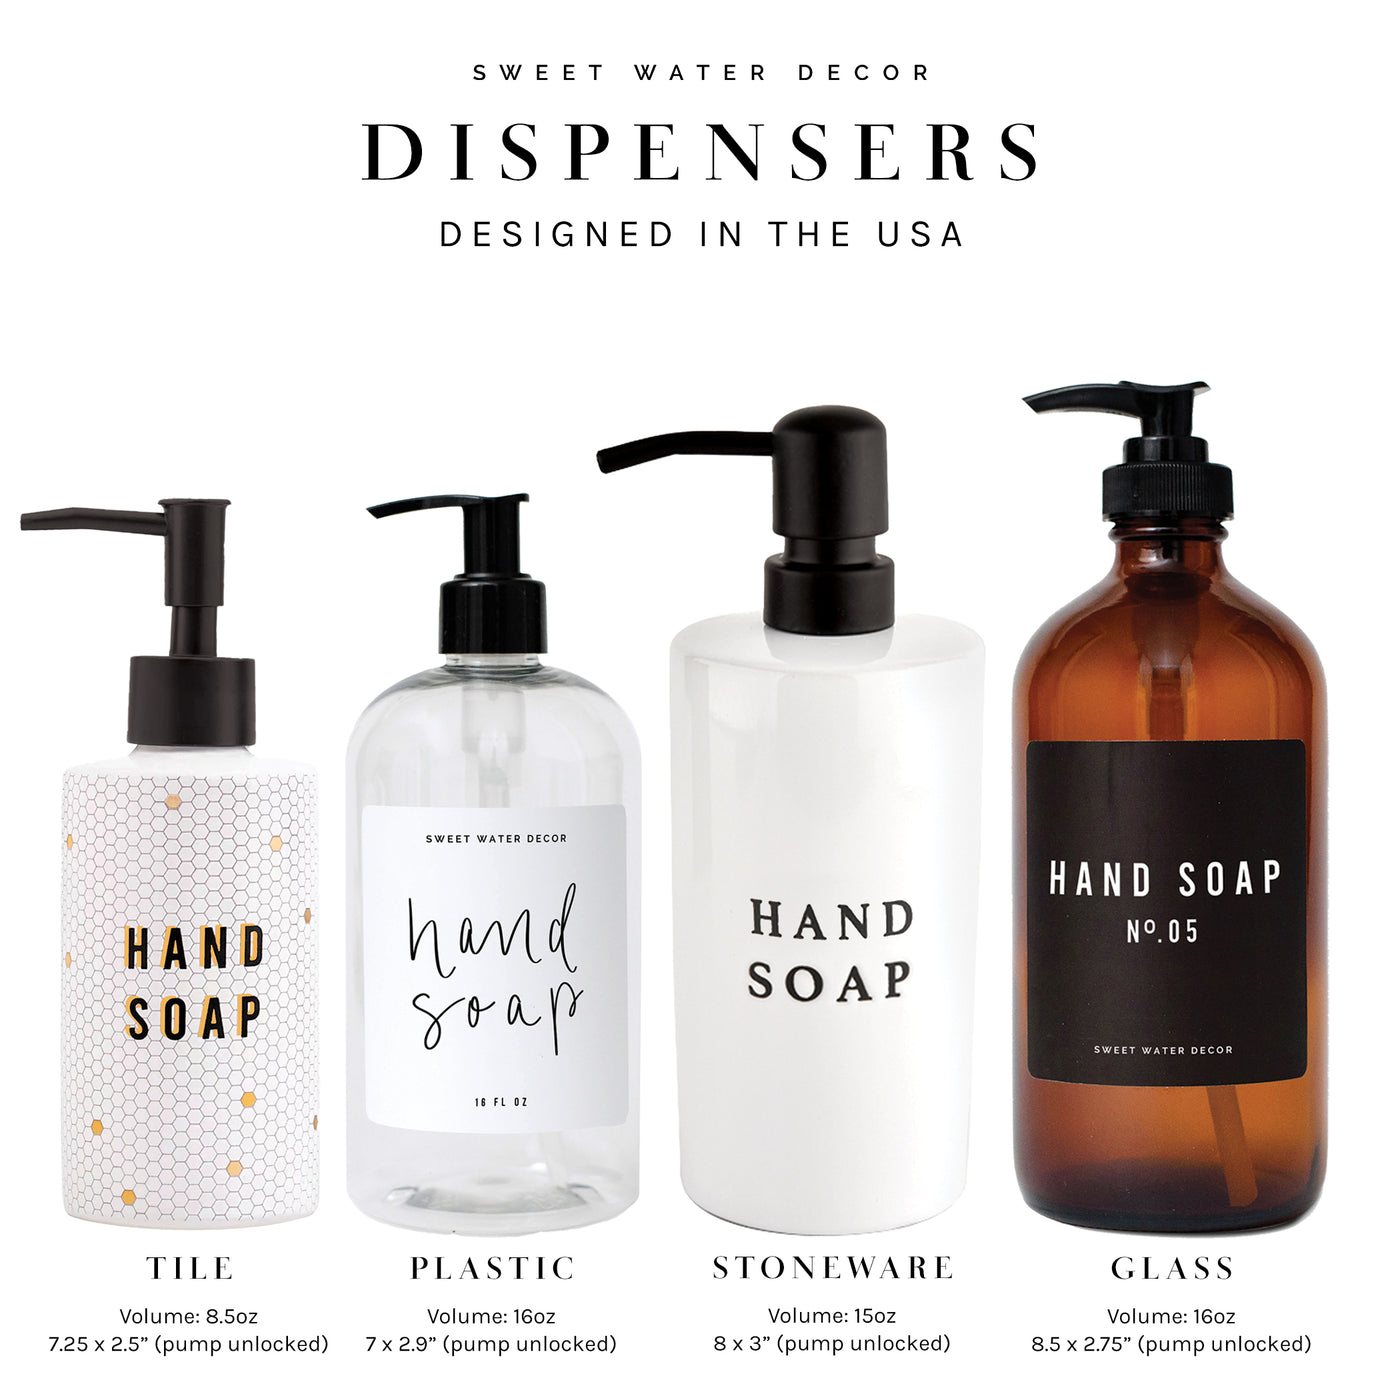 16oz Clear Glass Hand Soap Dispenser - Black Label - Sweet Water Decor - Dispensers